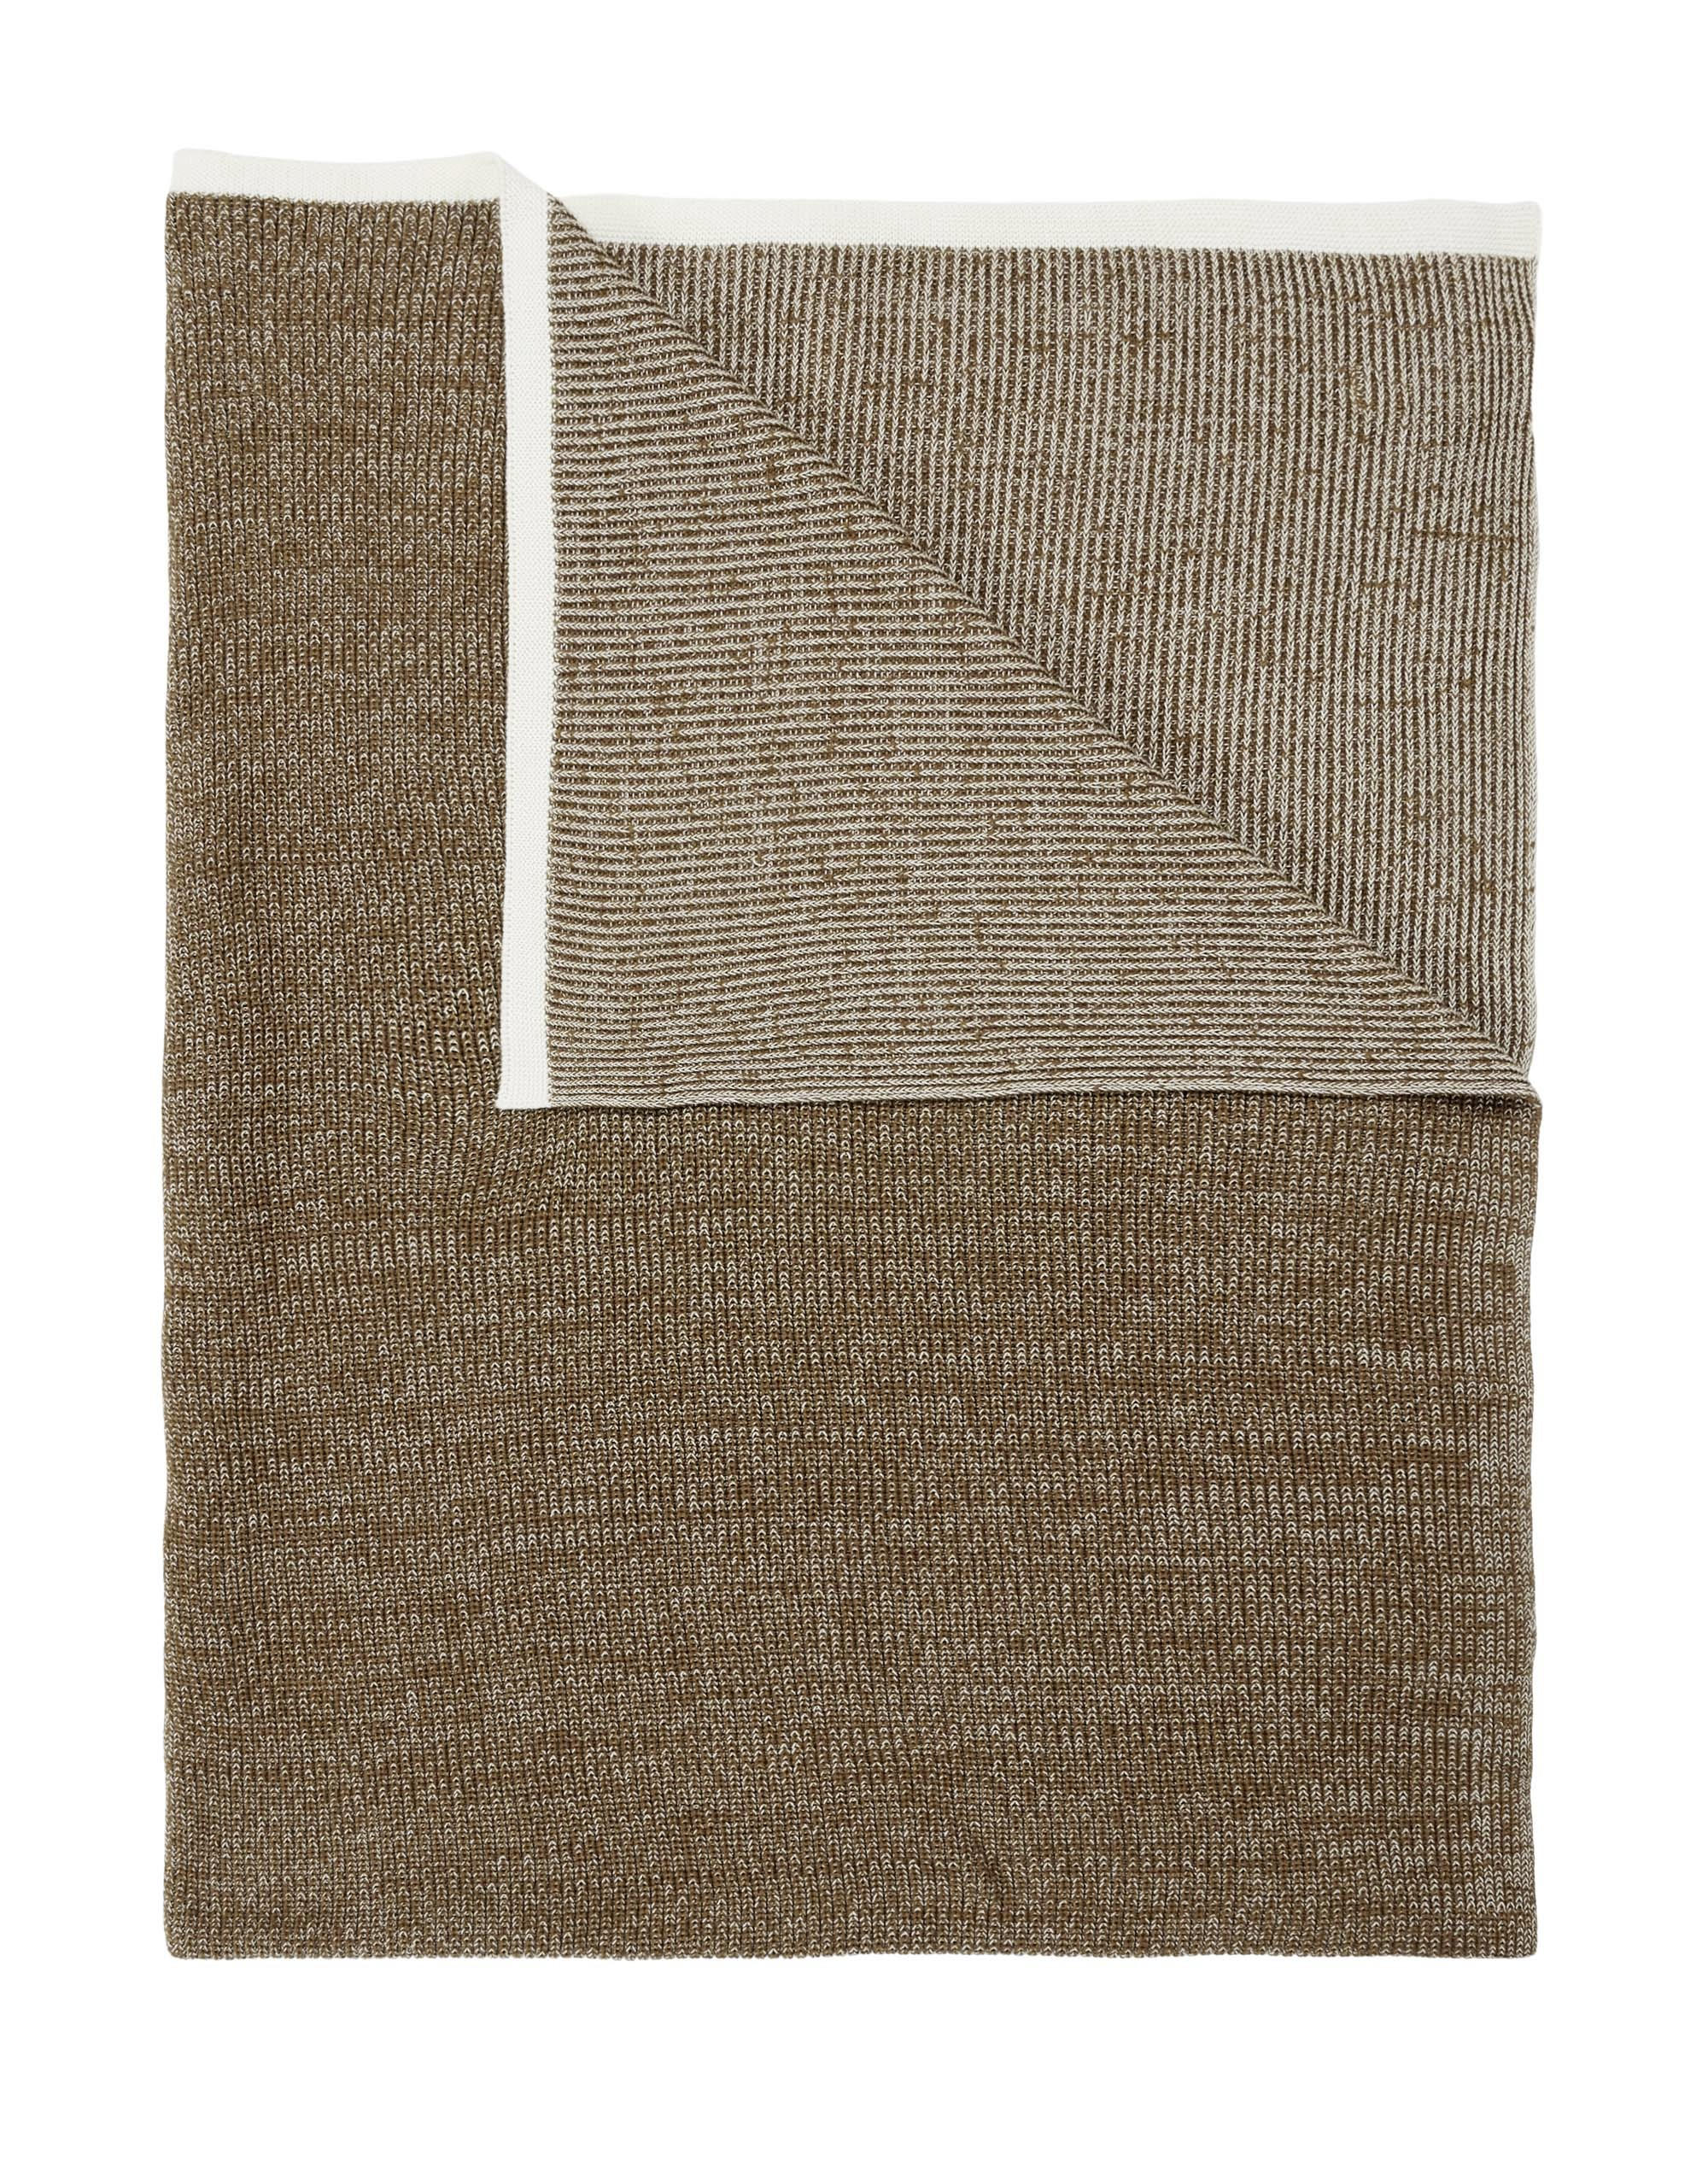 PLAID 130/170 cm  - Braun, Basics, Textil (130/170cm) - Marc O'Polo